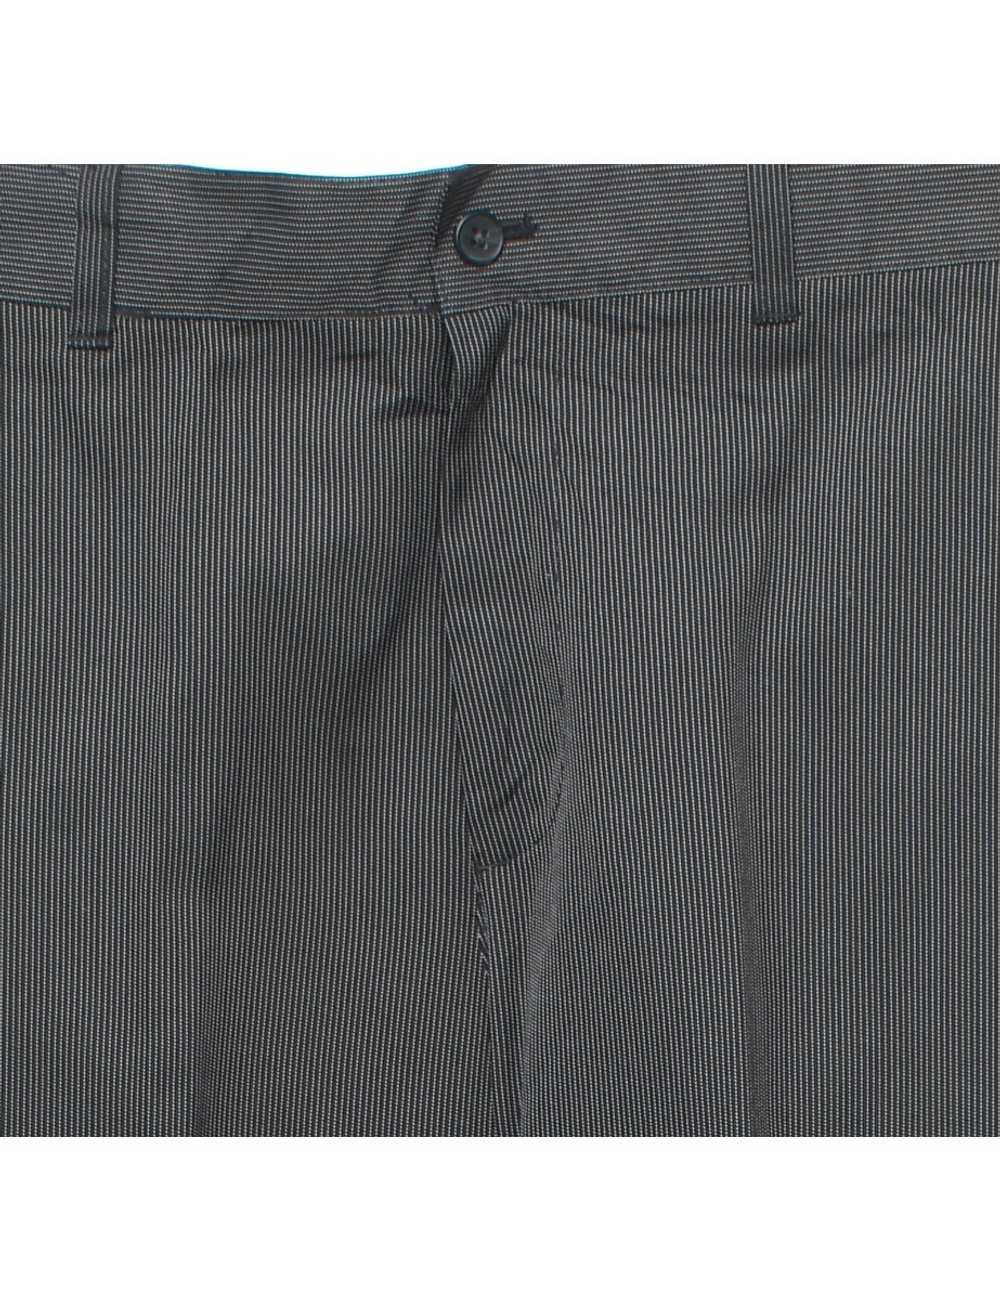 Izod Pinstriped Black Suit Trousers - W34 L30 - image 3